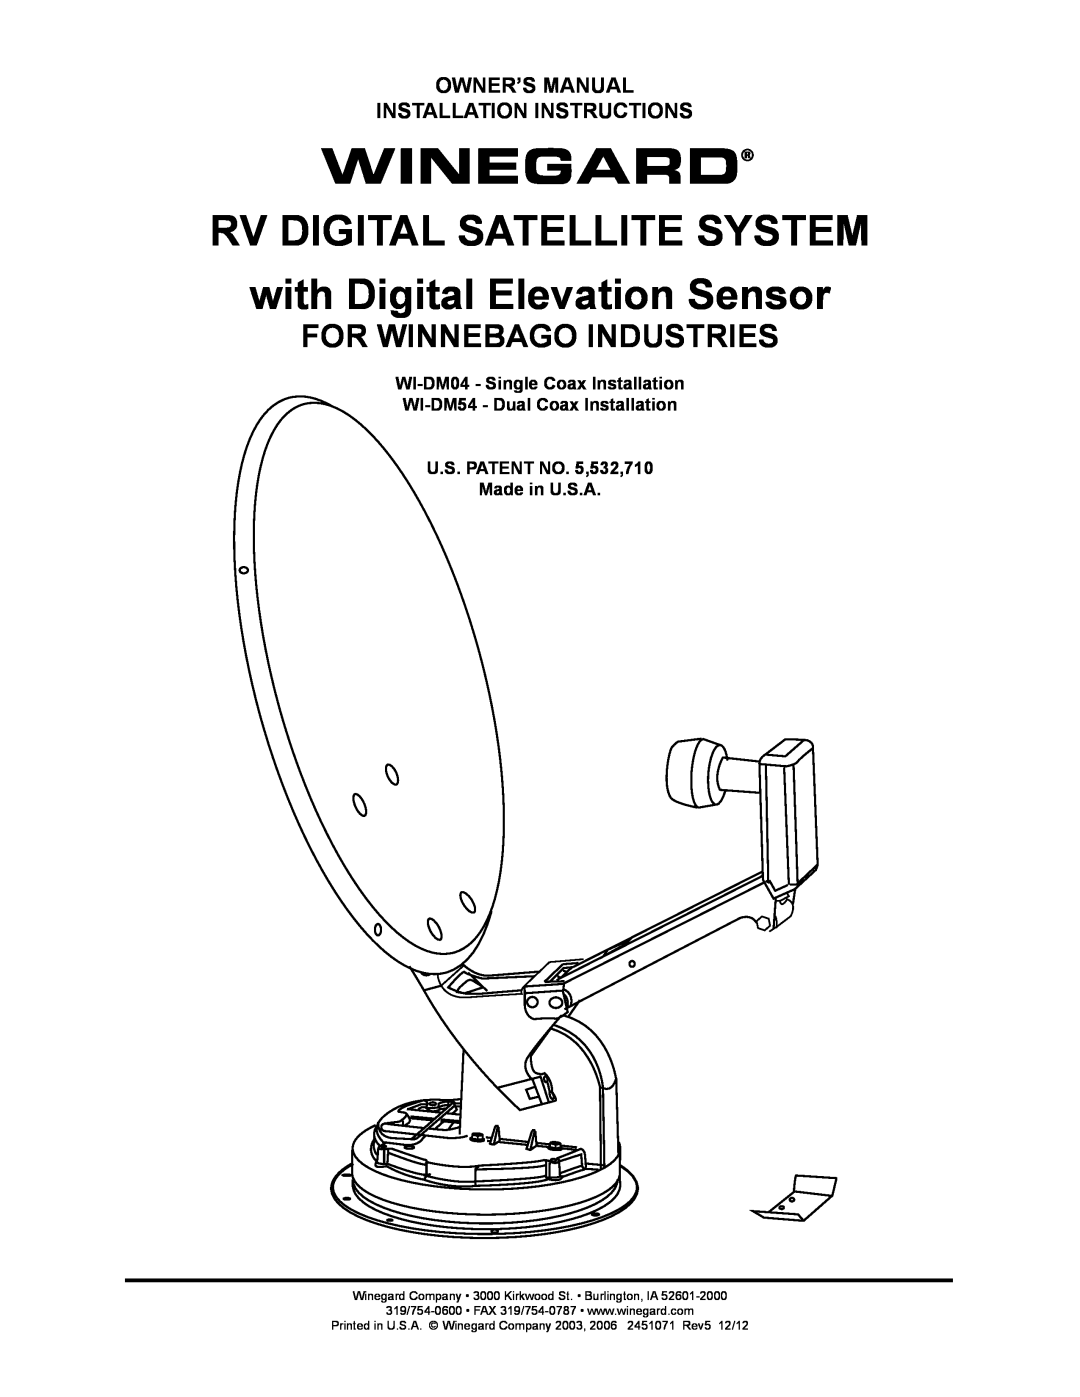 Winegard WI-DM54, WI-DM04 owner manual Winegard, RV DIGITAL SATELLITE SYSTEM with Digital Elevation Sensor 